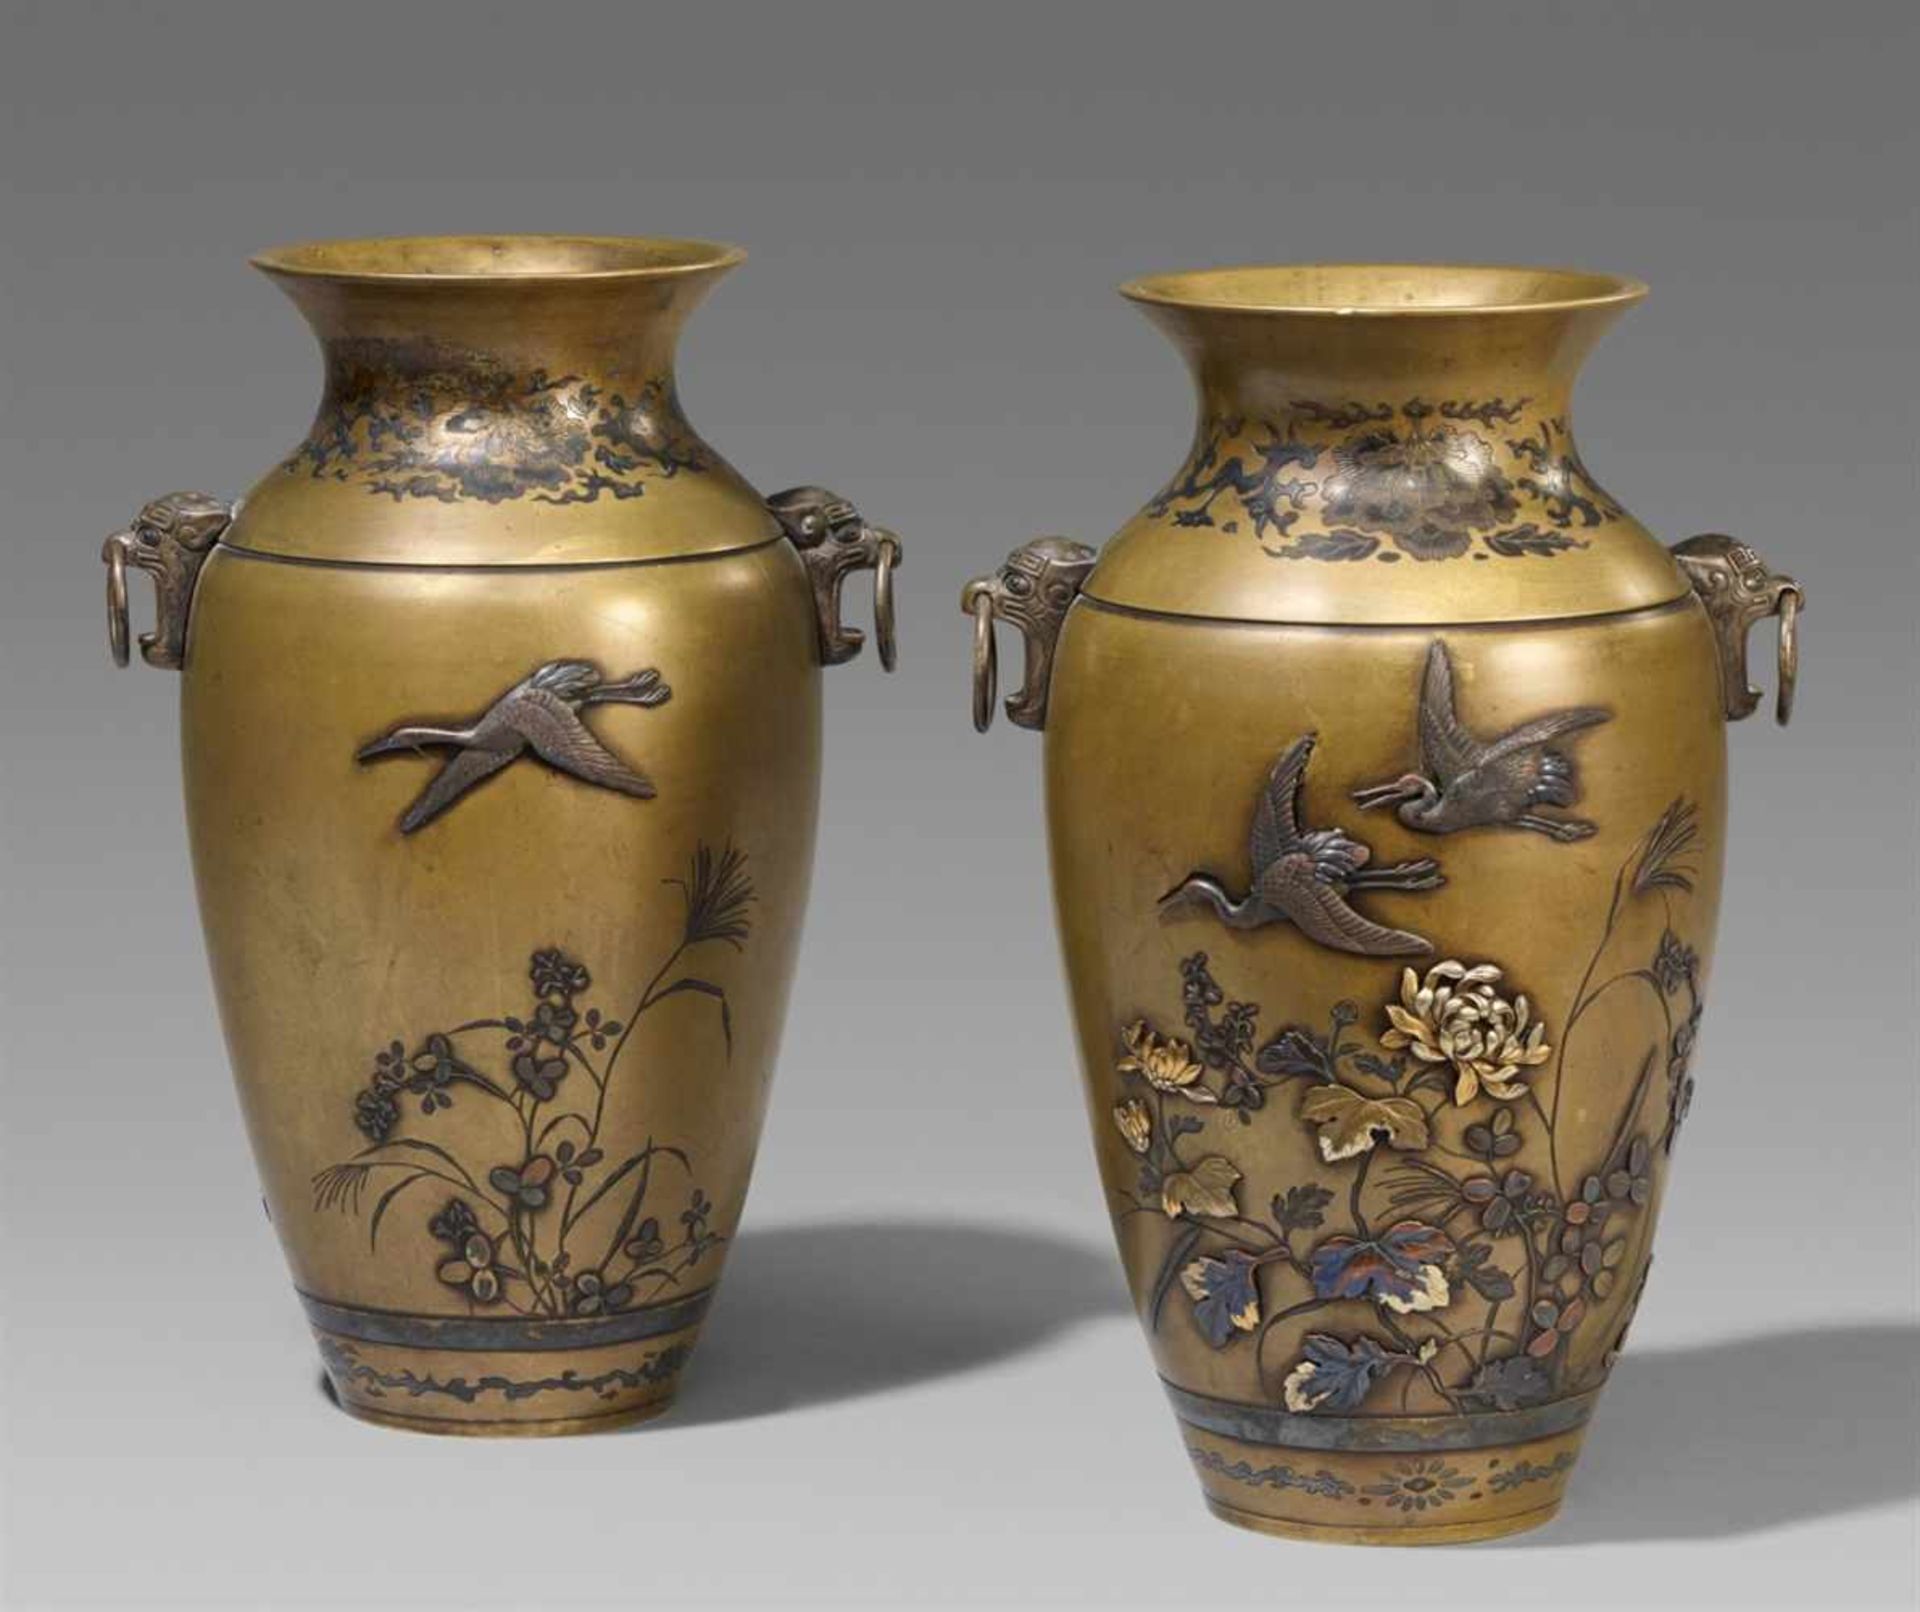 A pair of sentoku vases. Late 19th century